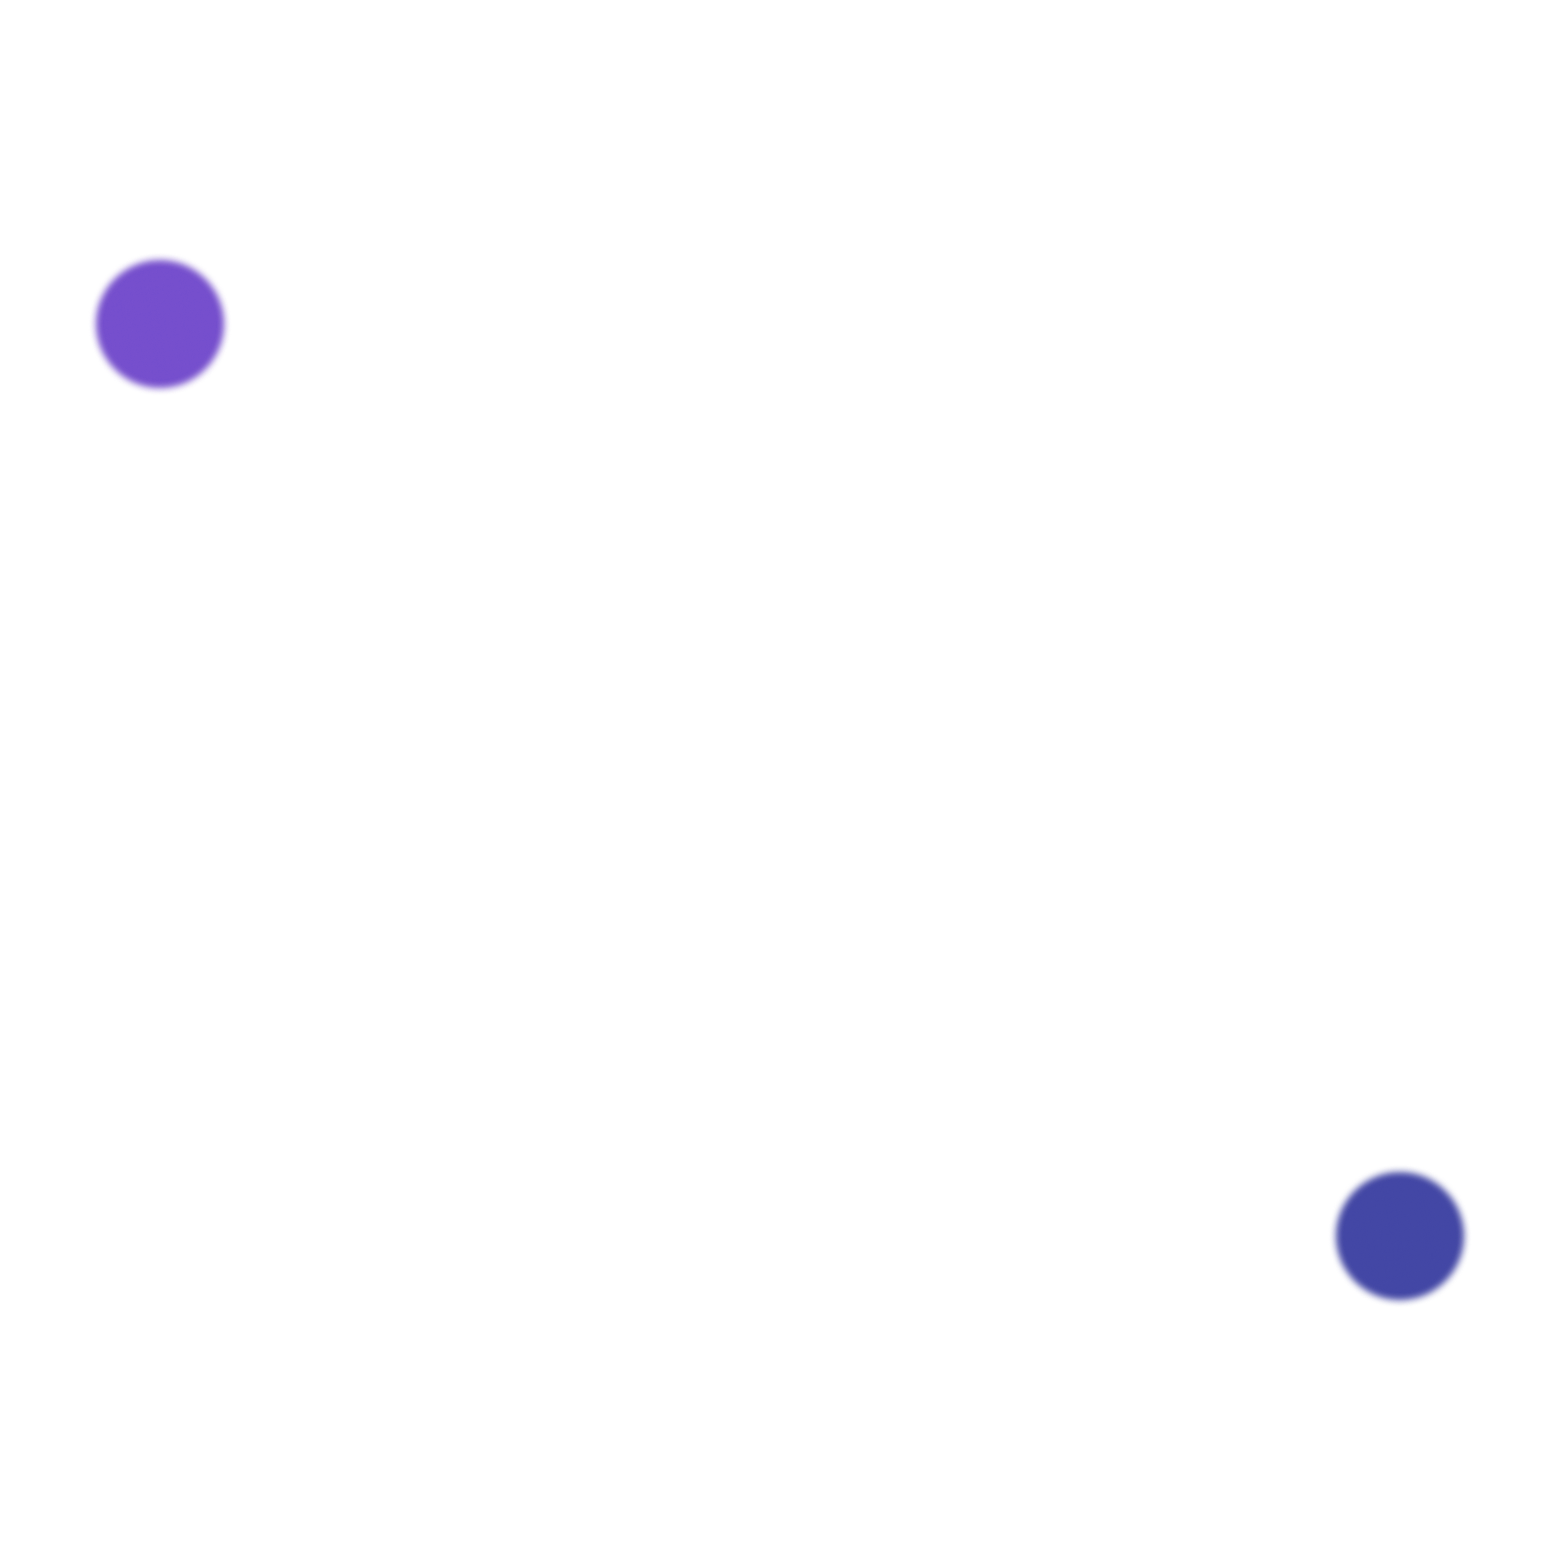 Decorative graphic of orbitting spheres